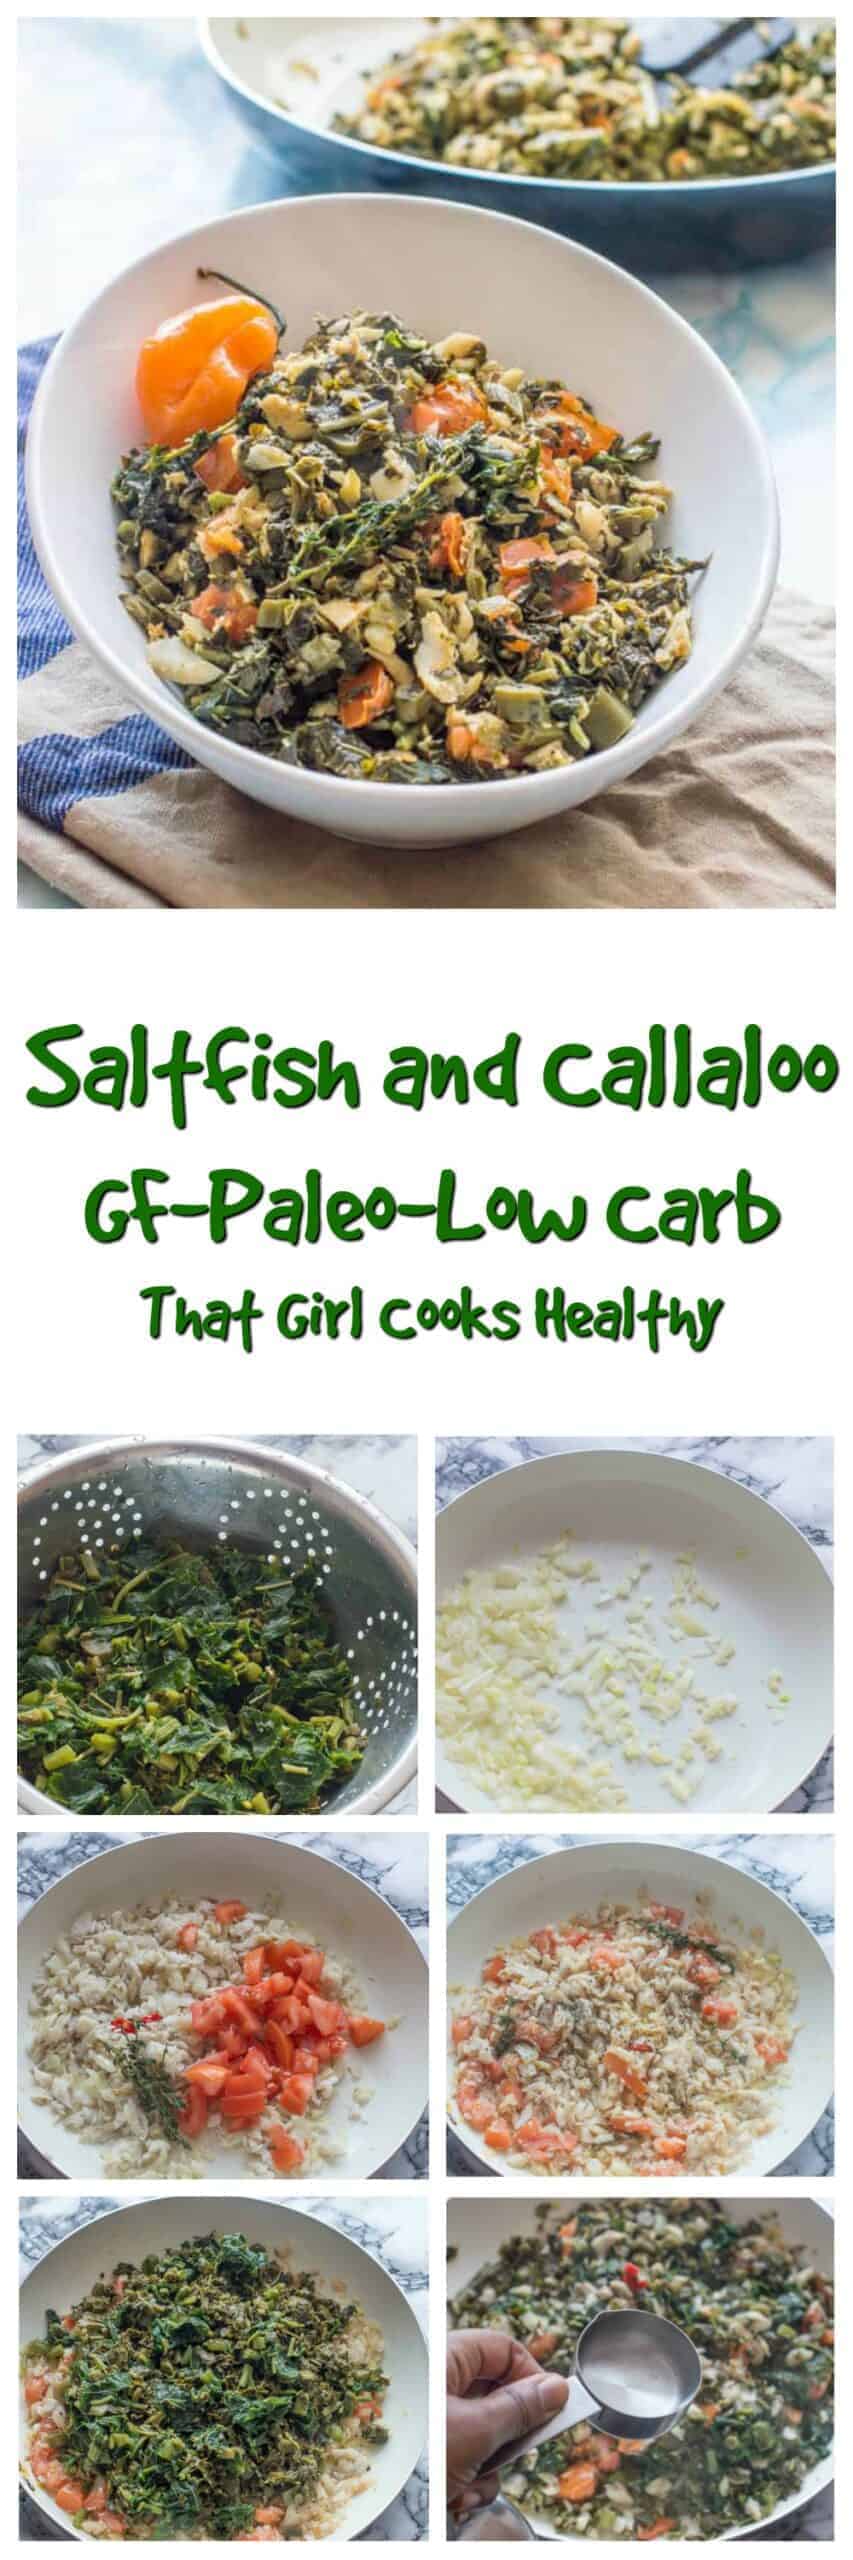 Saltfish and callaloo - That Girl Cooks Healthy